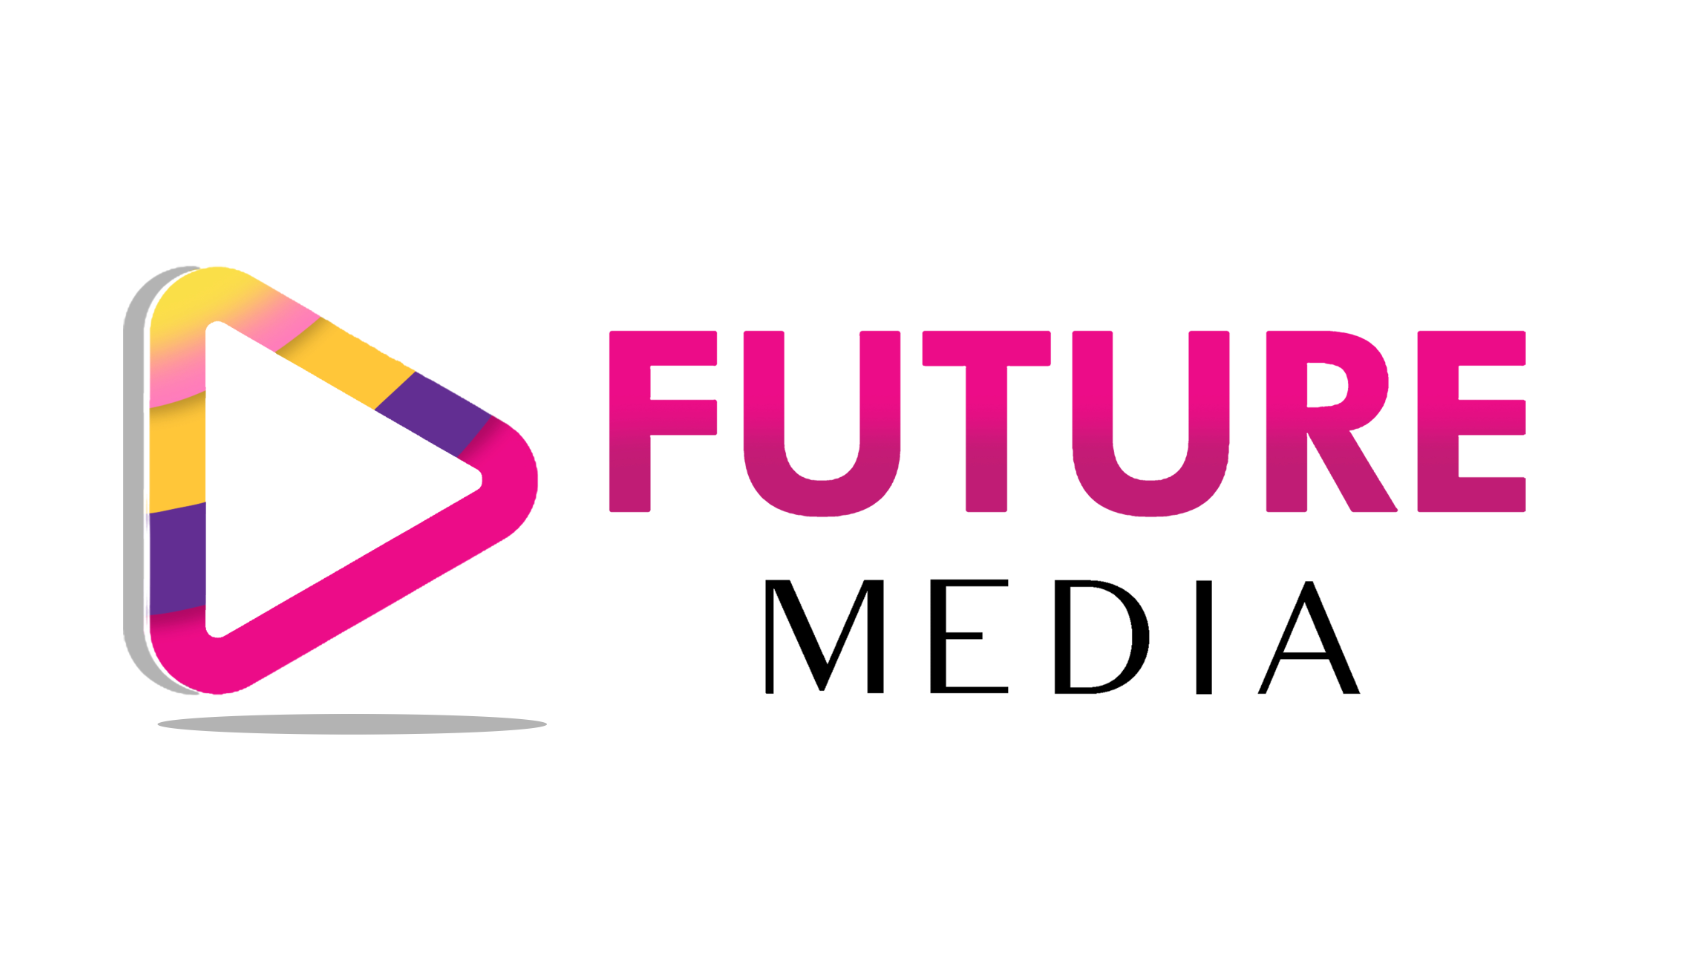 FUTURE MEDIA logo